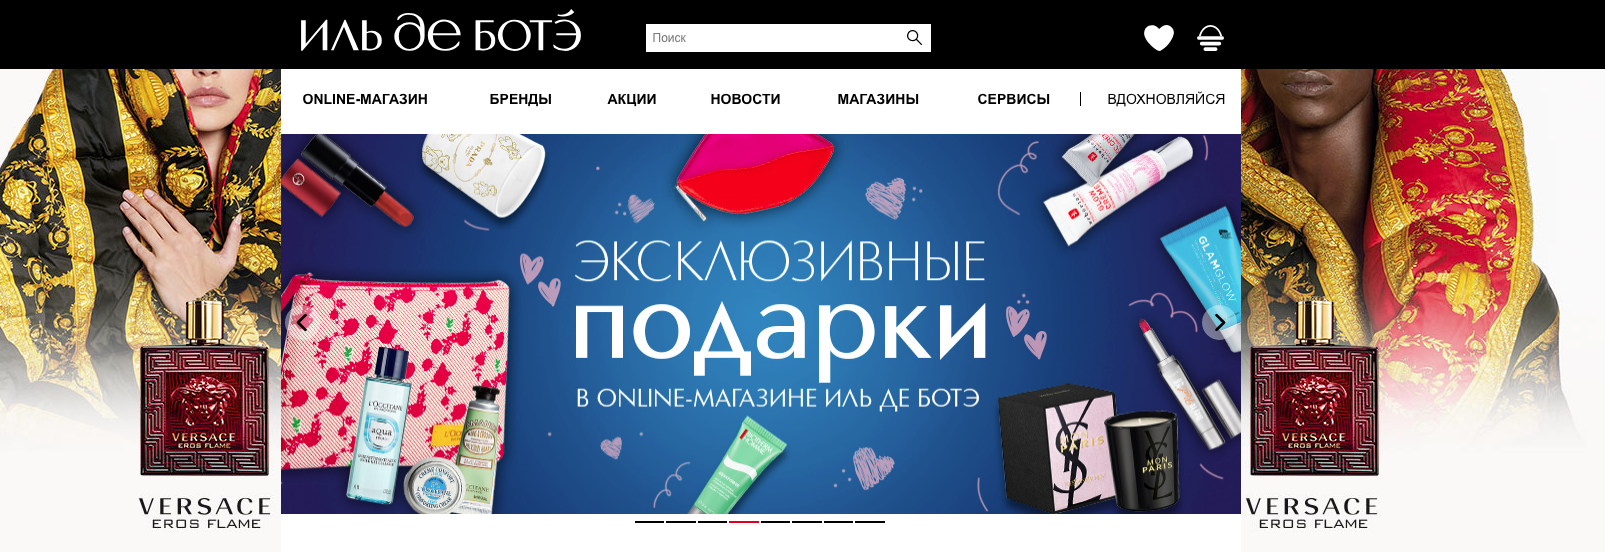 Ildebote Ru Интернет Магазин На Русском